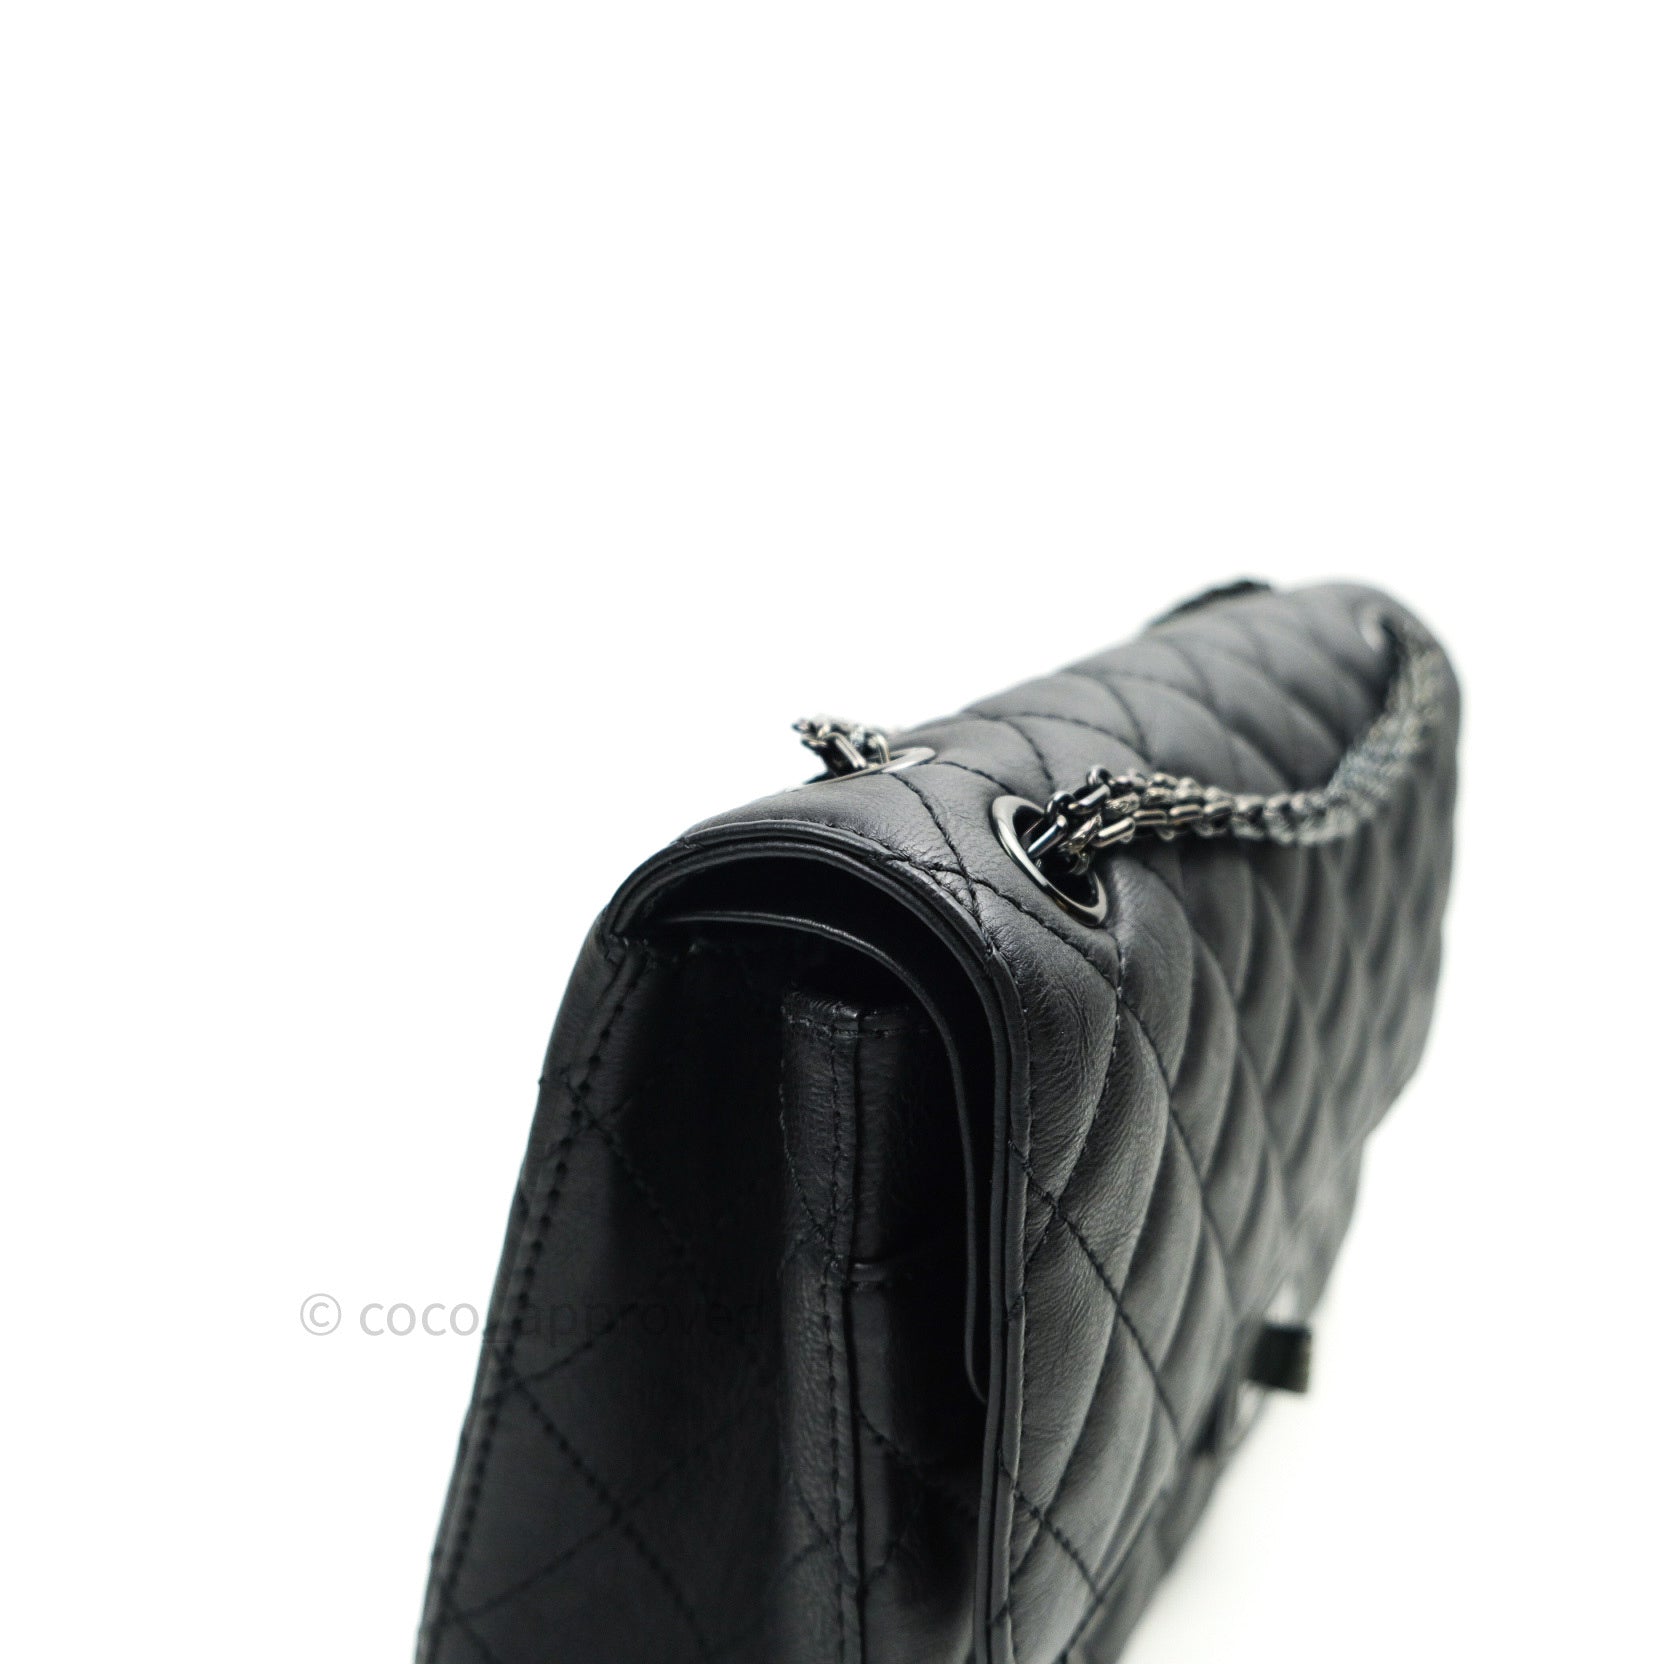 Chanel So Black Reissue 2.55 Flap Bag Chevron Aged Calfskin 226 - ShopStyle